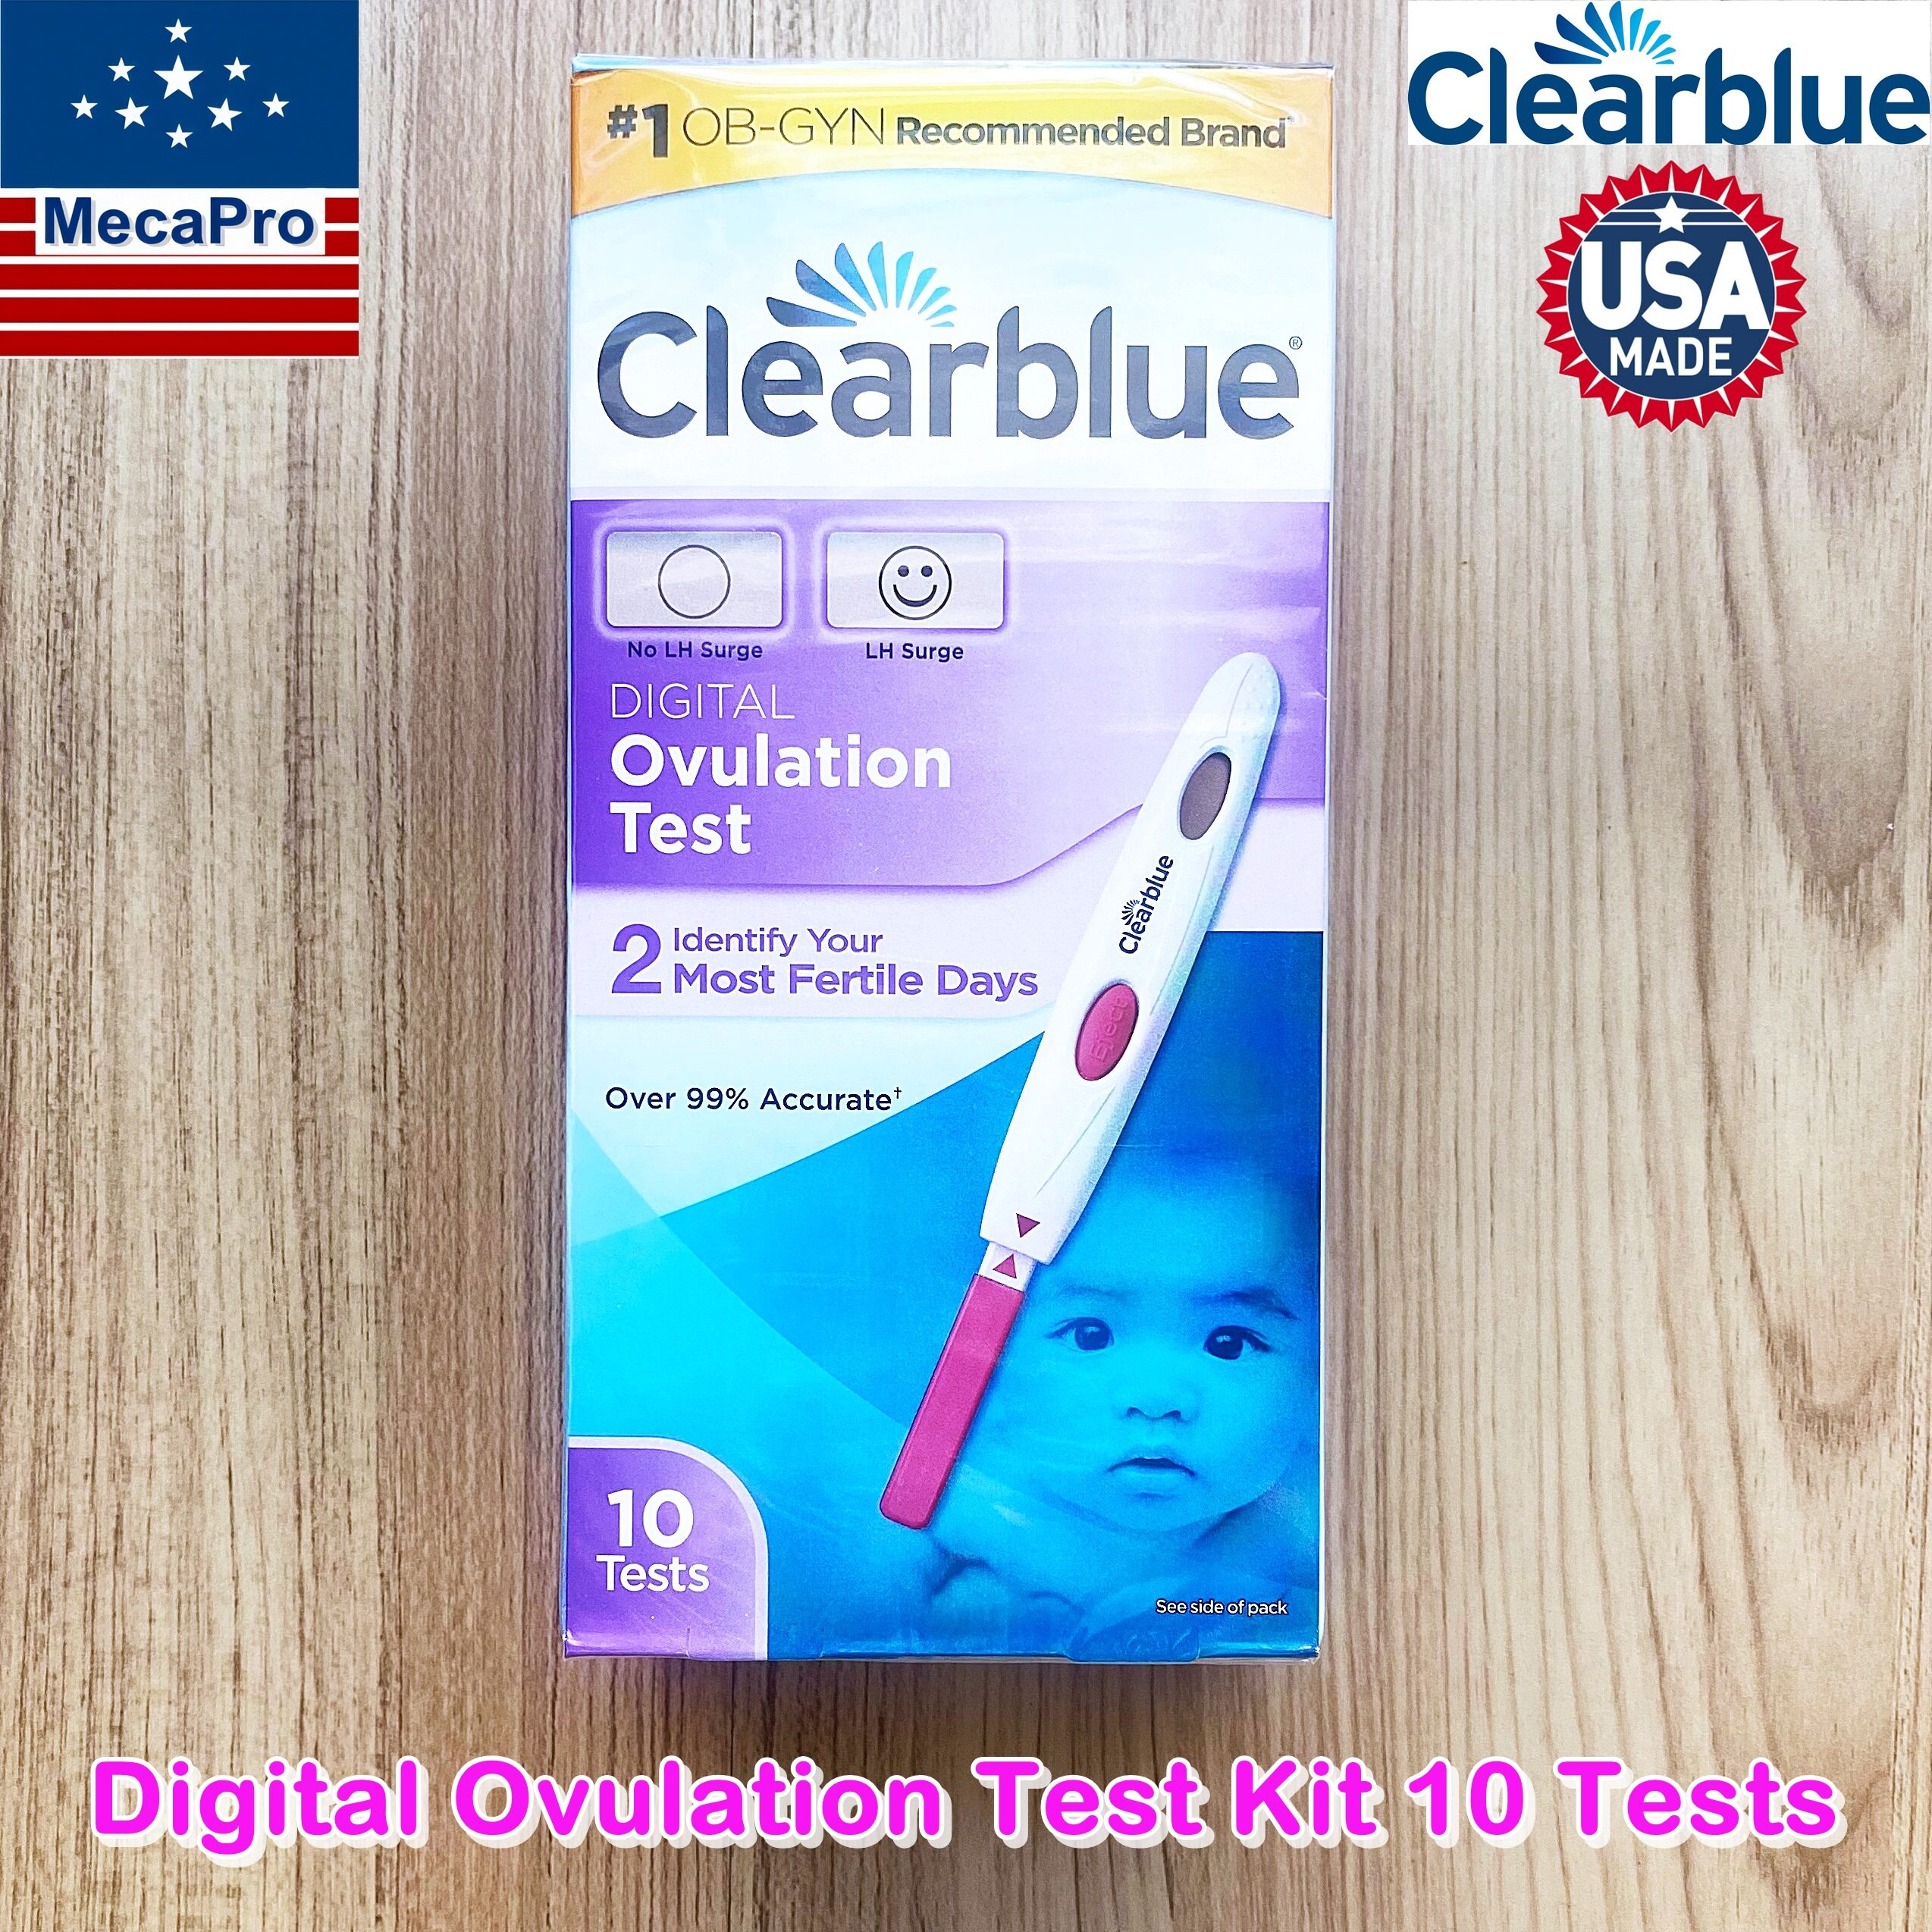 Clearblue® Digital Ovulation Test Kit 10 Tests อุปกรณ์ทดสอบการตกไข่แบบดิจิตอล เพิ่มโอกาสตั้งครรภ์ ดีสำหรับผู้ที่อยากมีบุตรหรือมีบุตรยาก